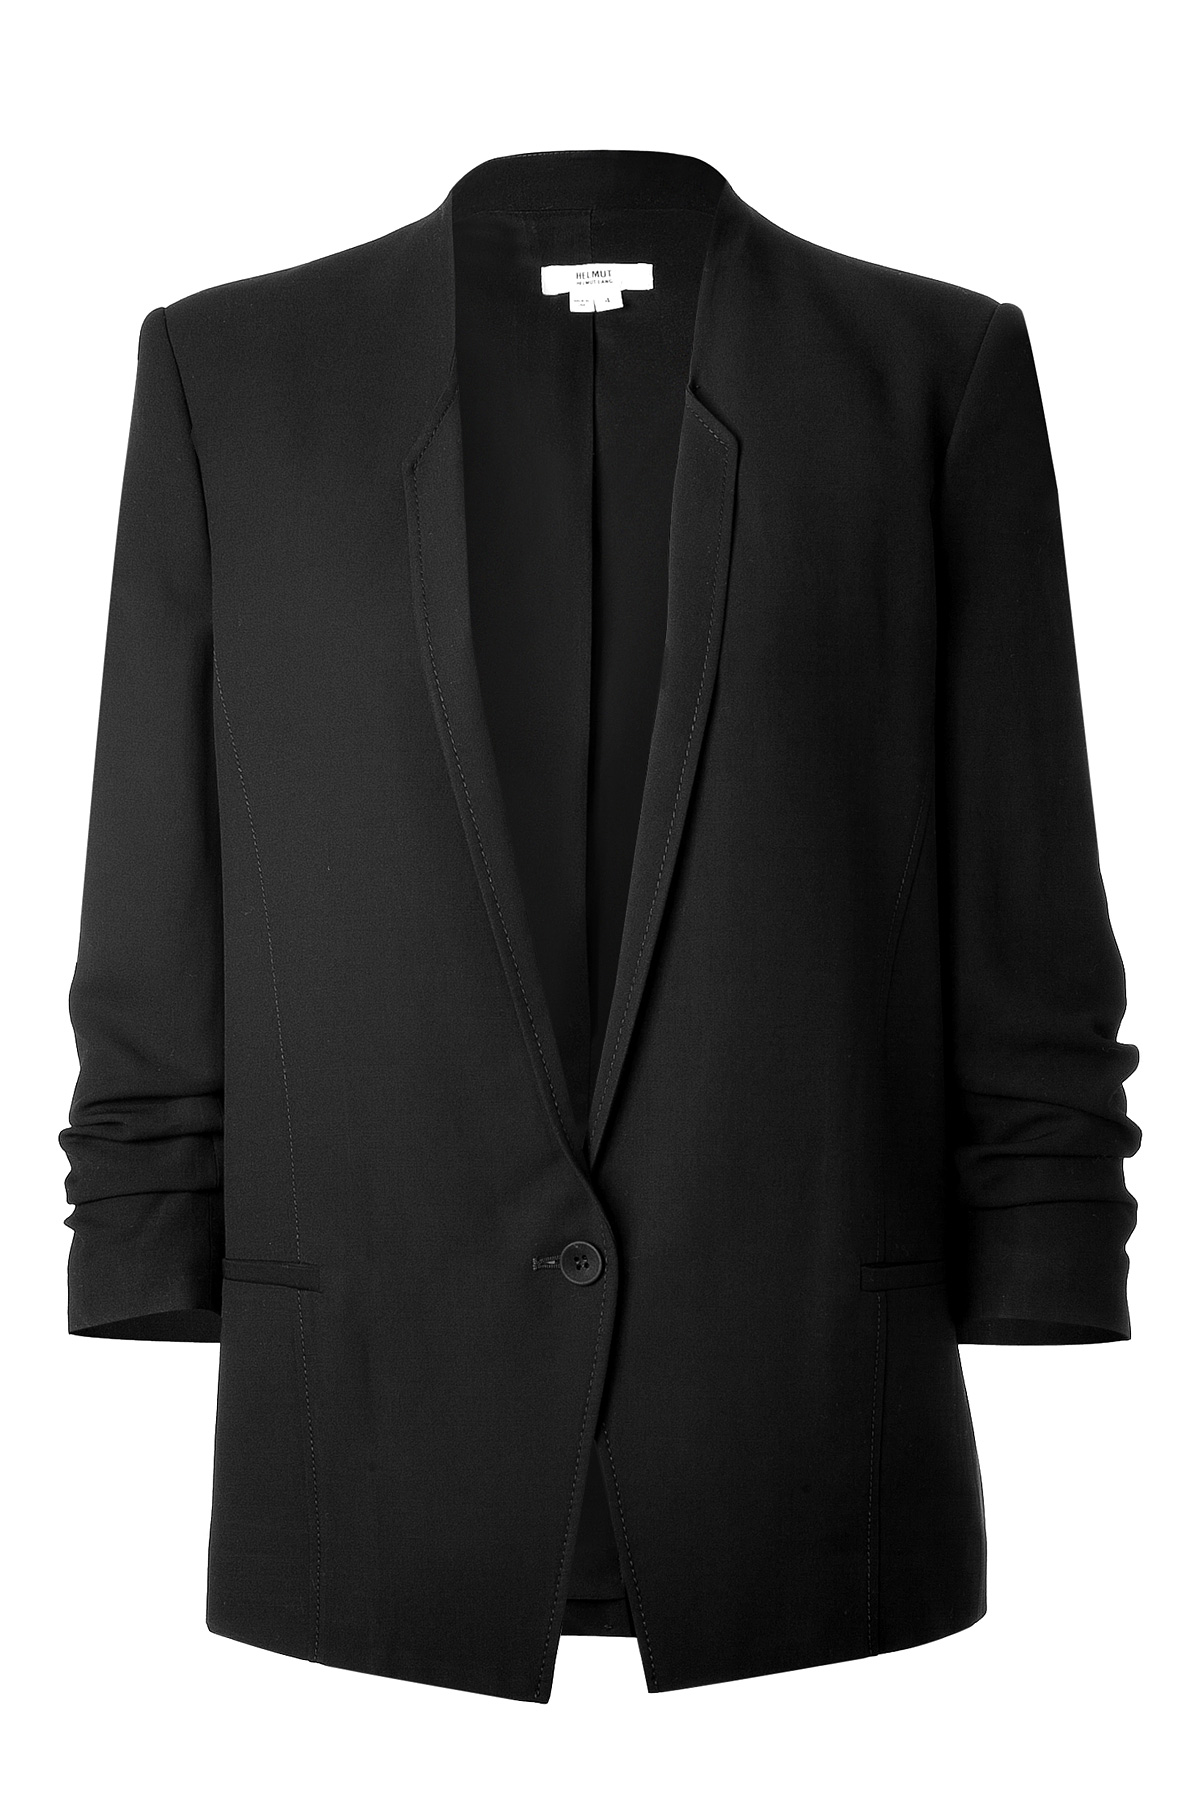 Helmut lang Slouchy Cropped Sleeve Blazer in Black | Lyst